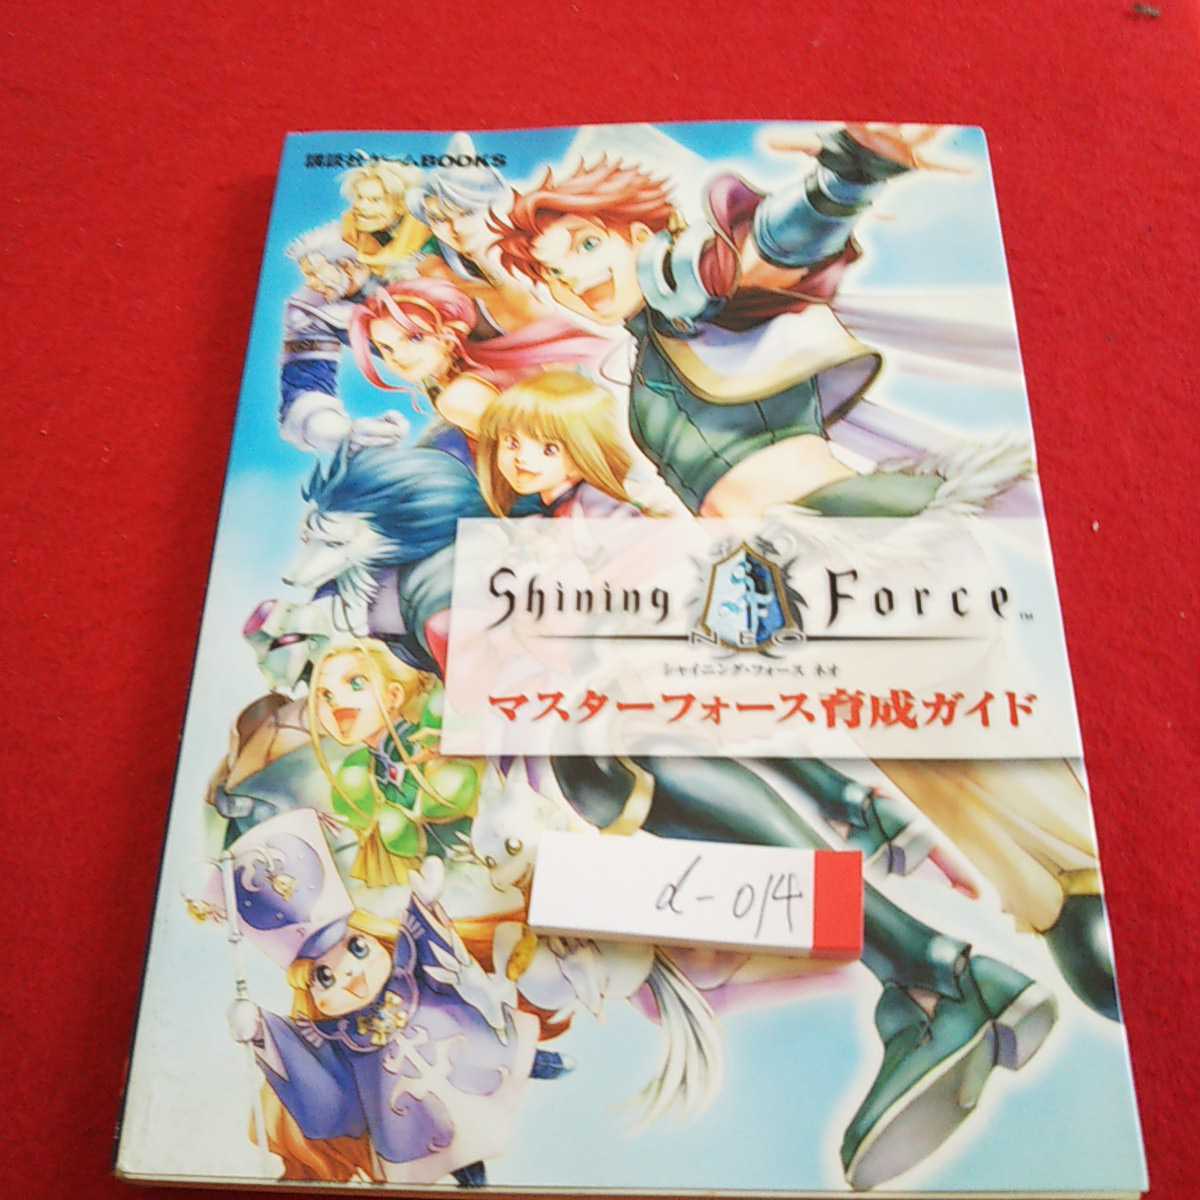 D-014 Shining Force Neo Master Force Руководство по обучению Kodansha Game Books PS2 Опубликовано в Heisei 17*0